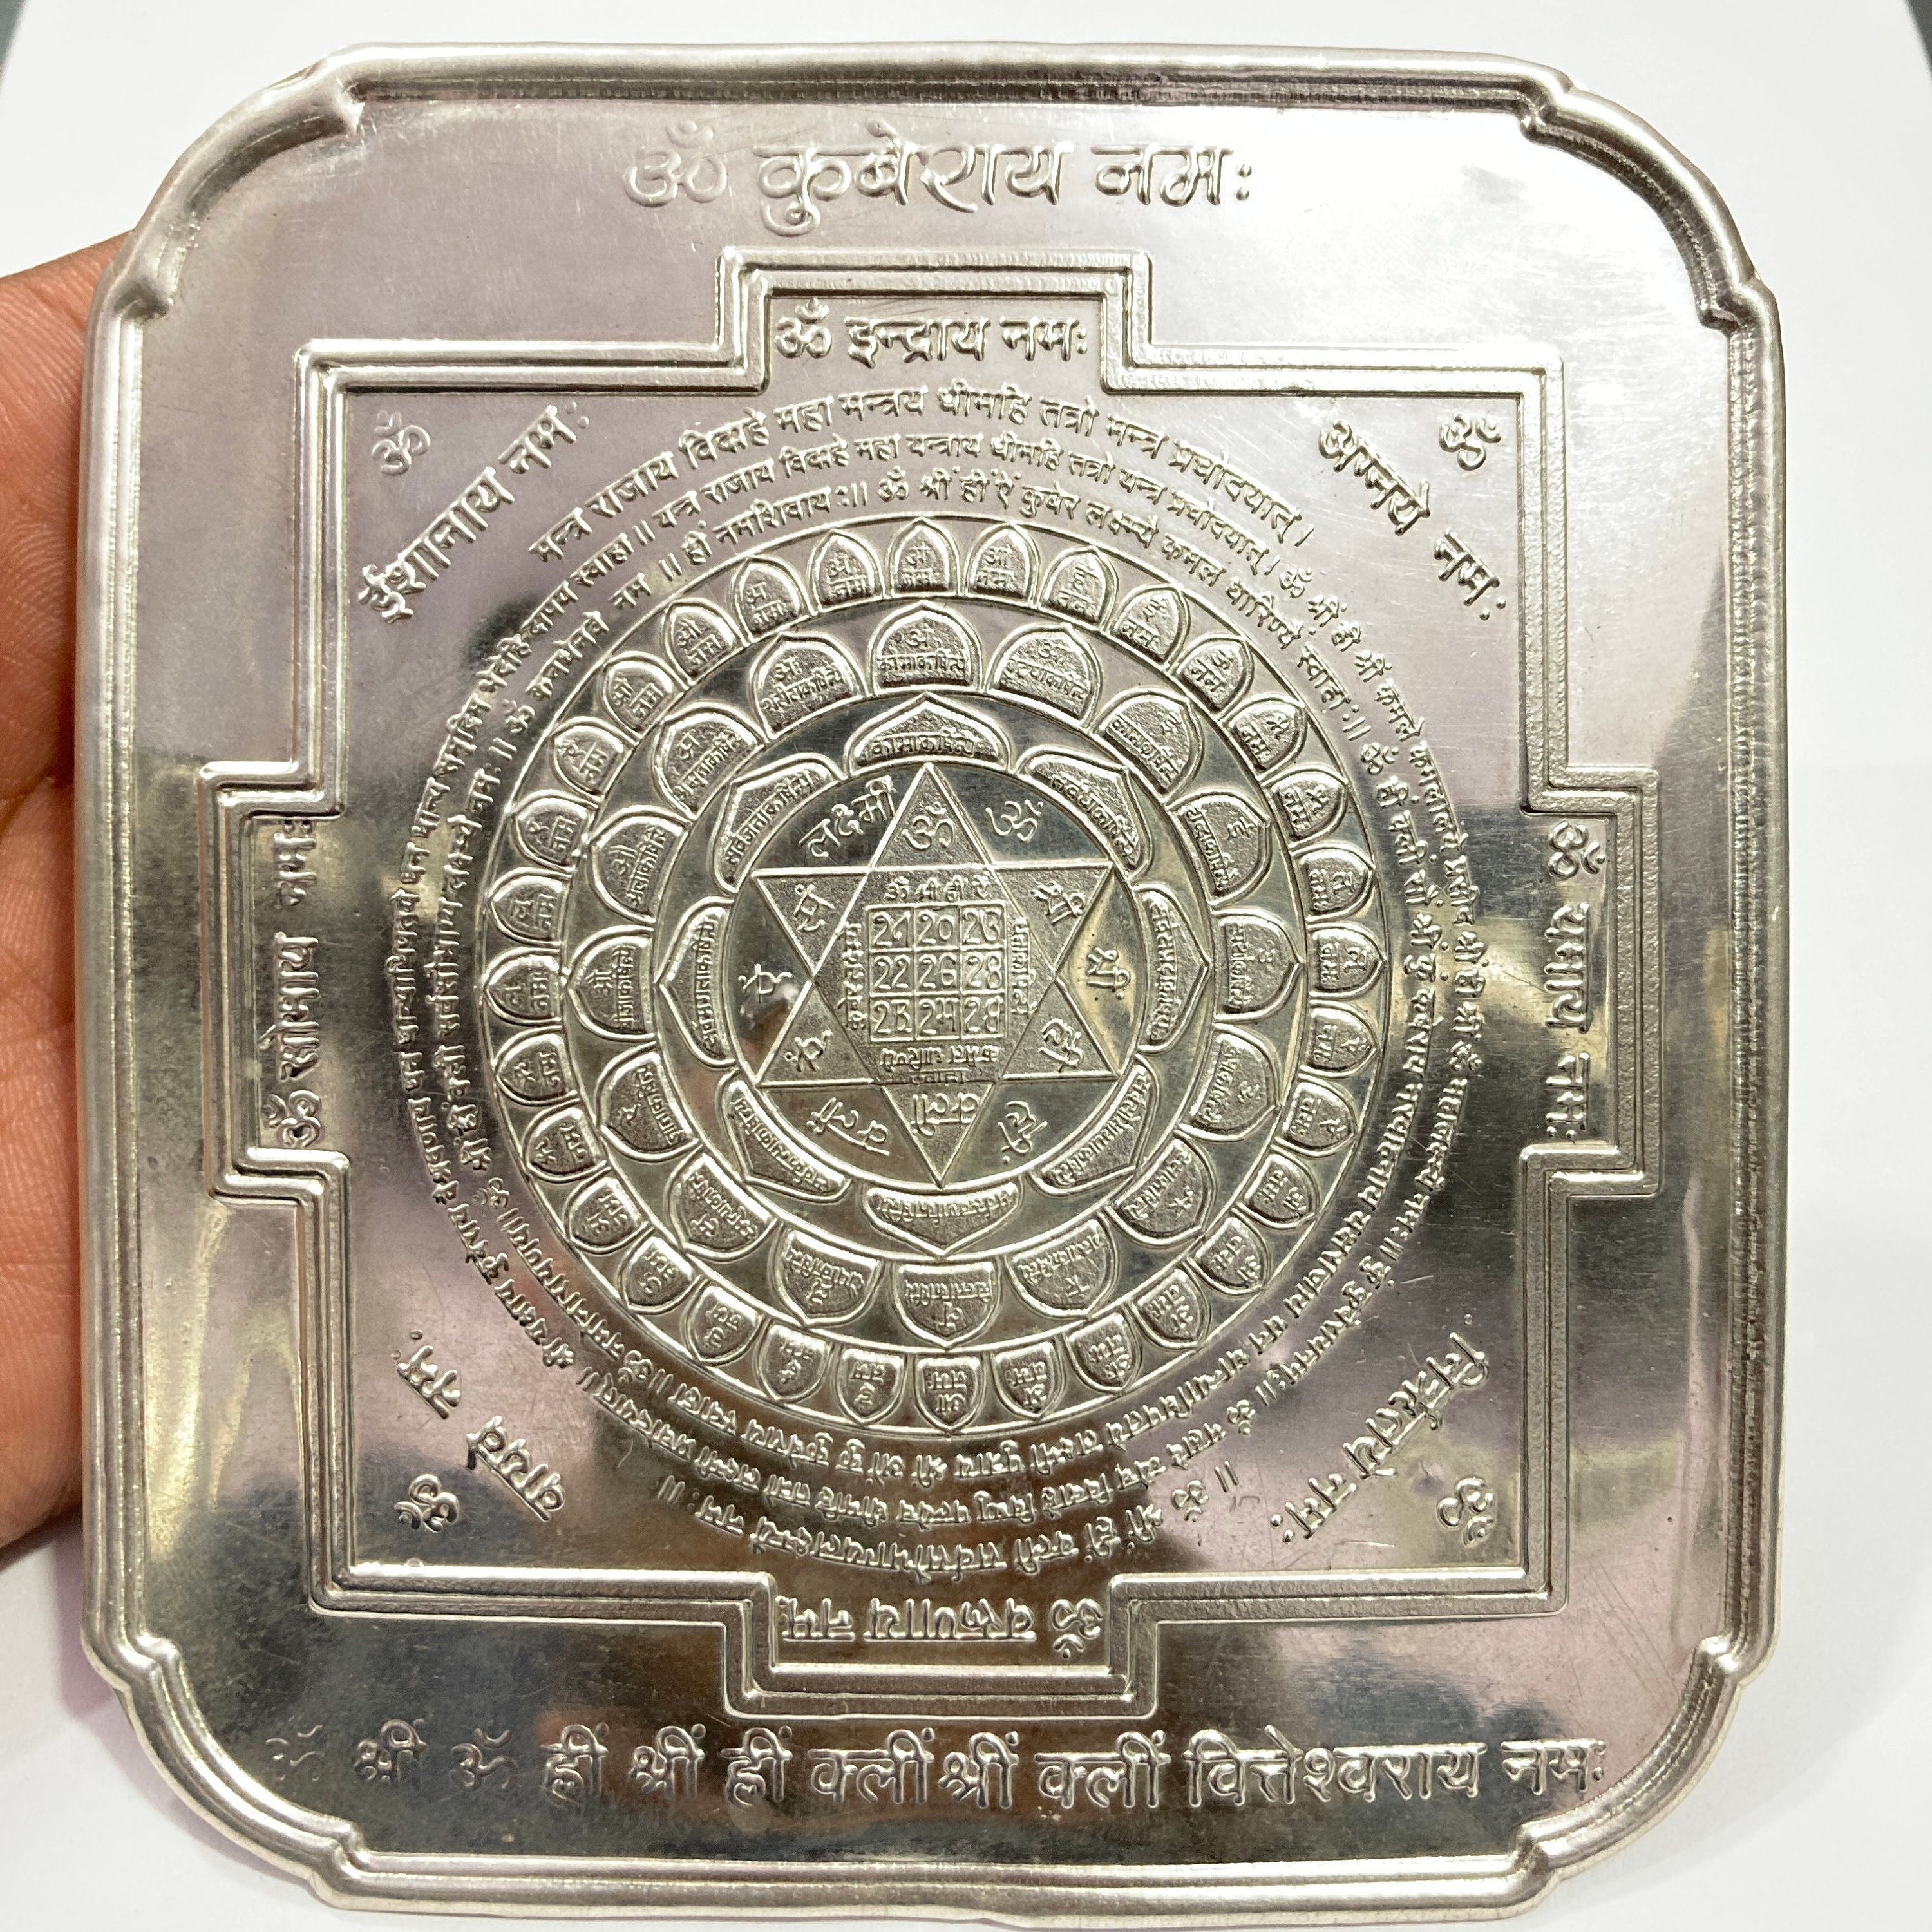 Buy Rudra Centre Navgraha Shanti Yantra Ring in Antique Finish at Amazon.in